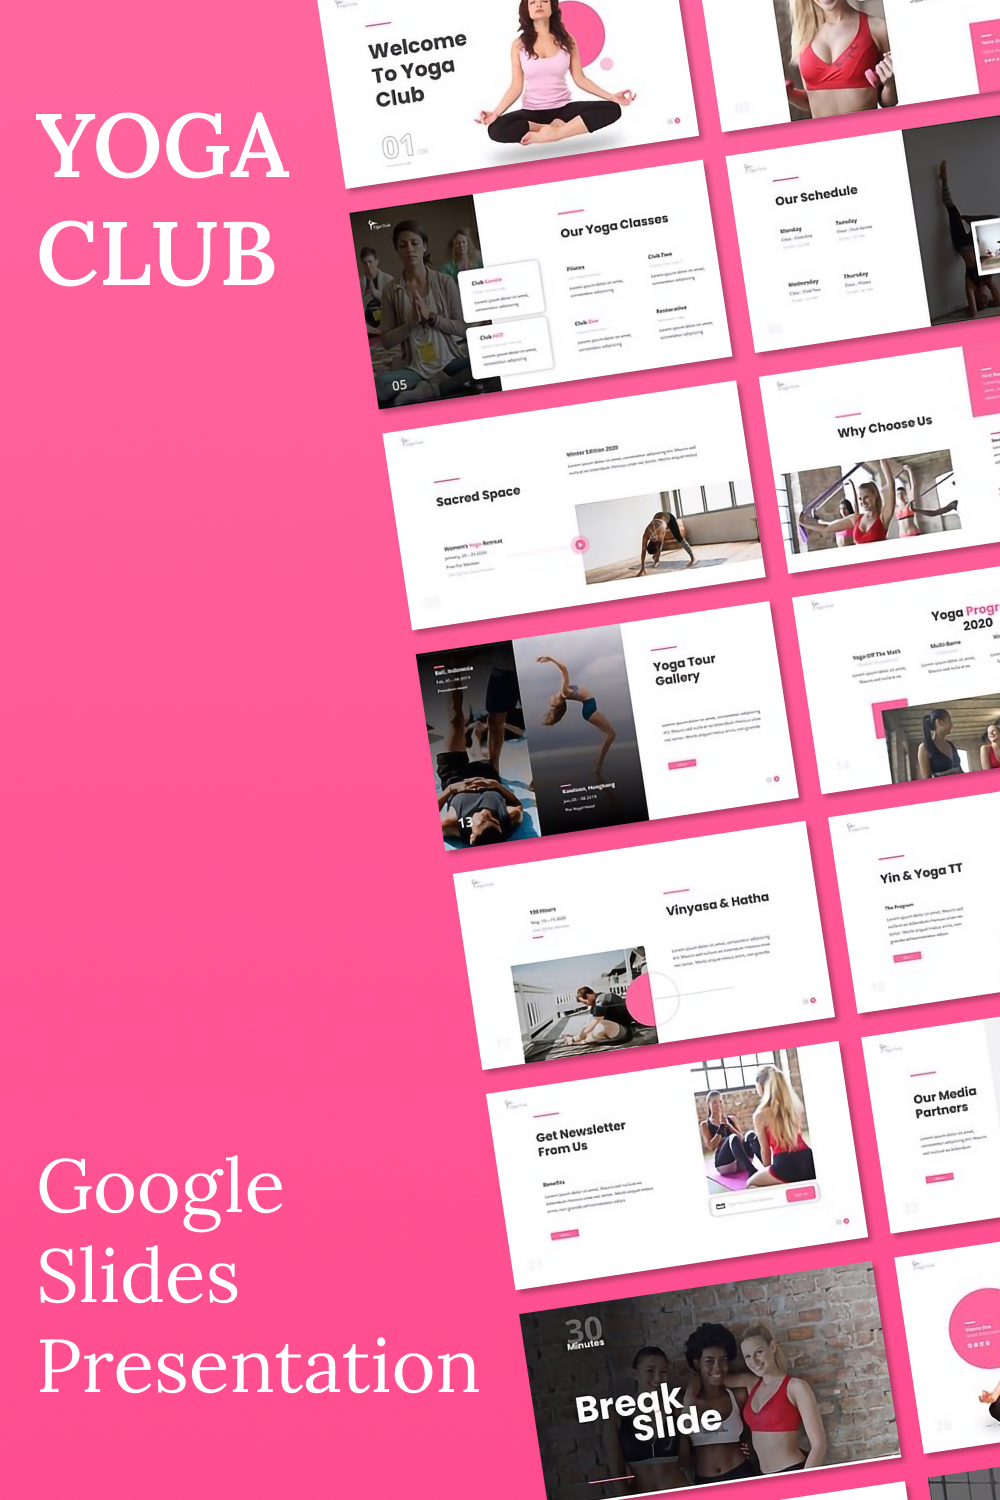 Yoga club google slides presentation of pinterest.